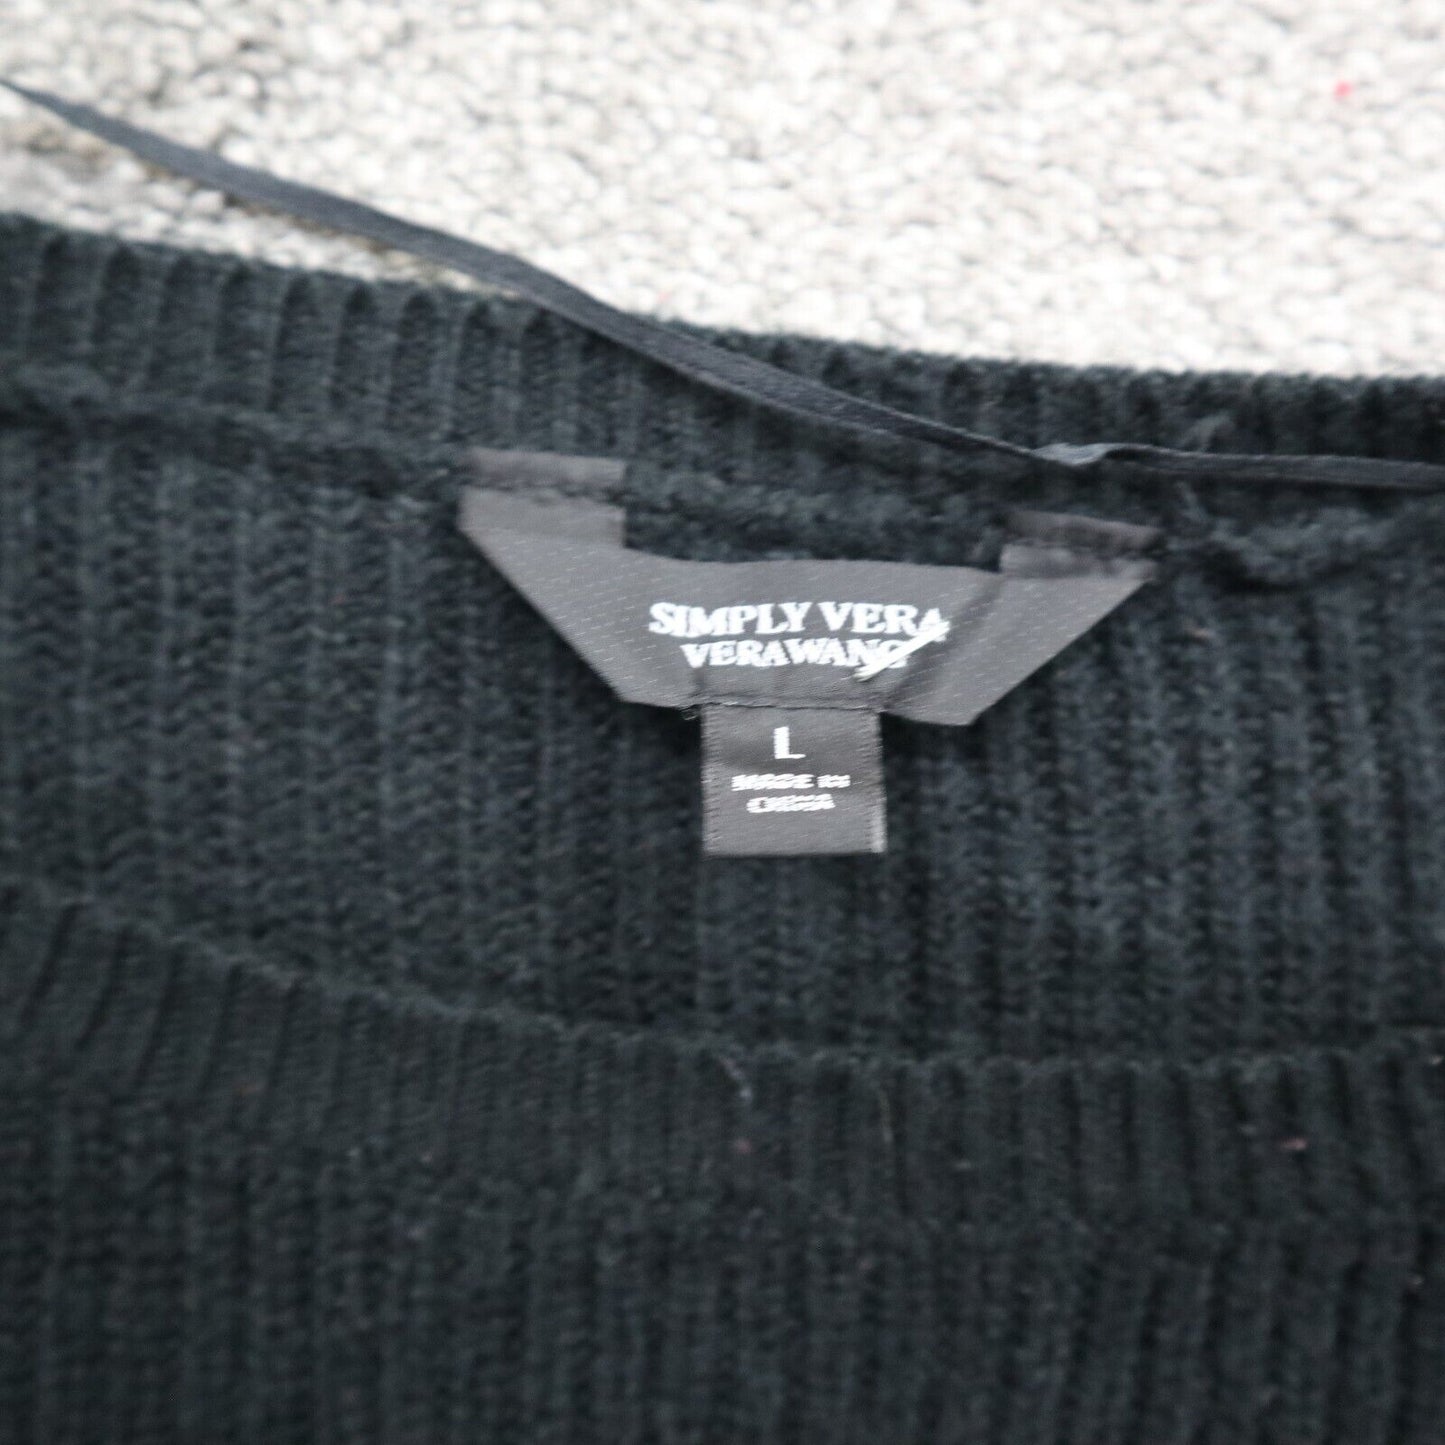 Simply Vera Vera Wang Womens Asymmetrical Sweater Long Sleeves Black Size Large